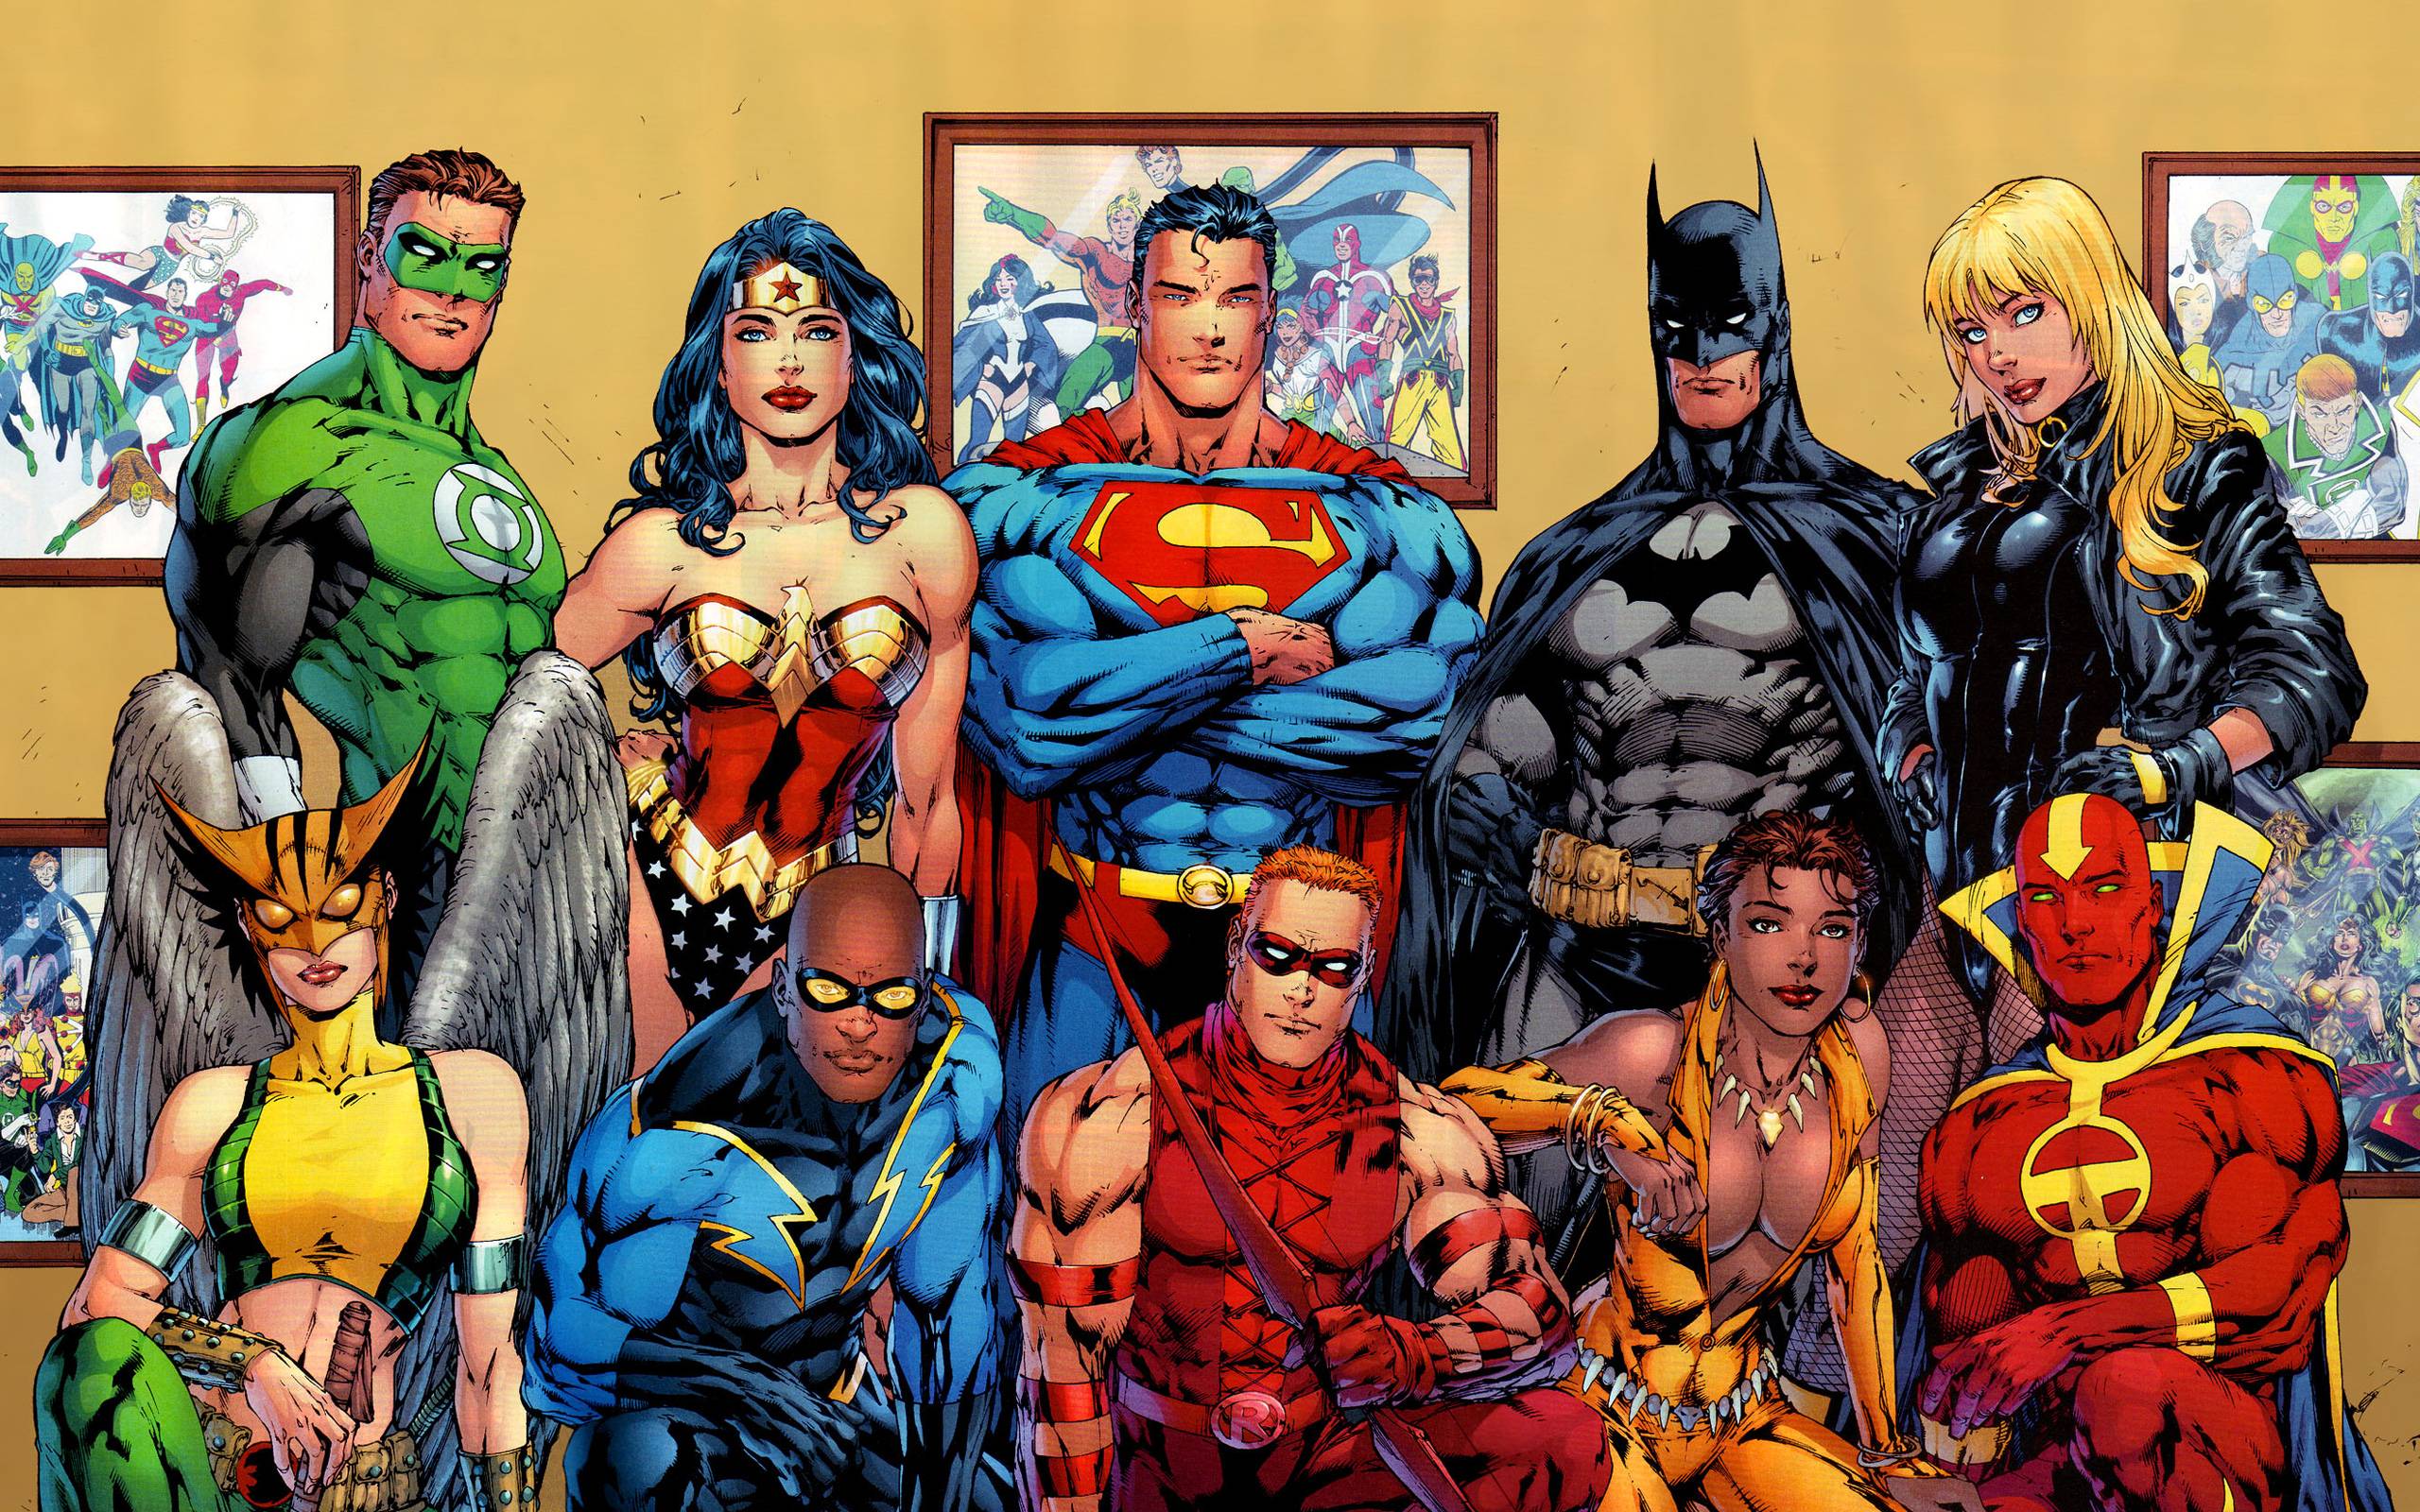 Justice League Wallpaper 19 264696 Image HD Wallpaper. Wallfoy